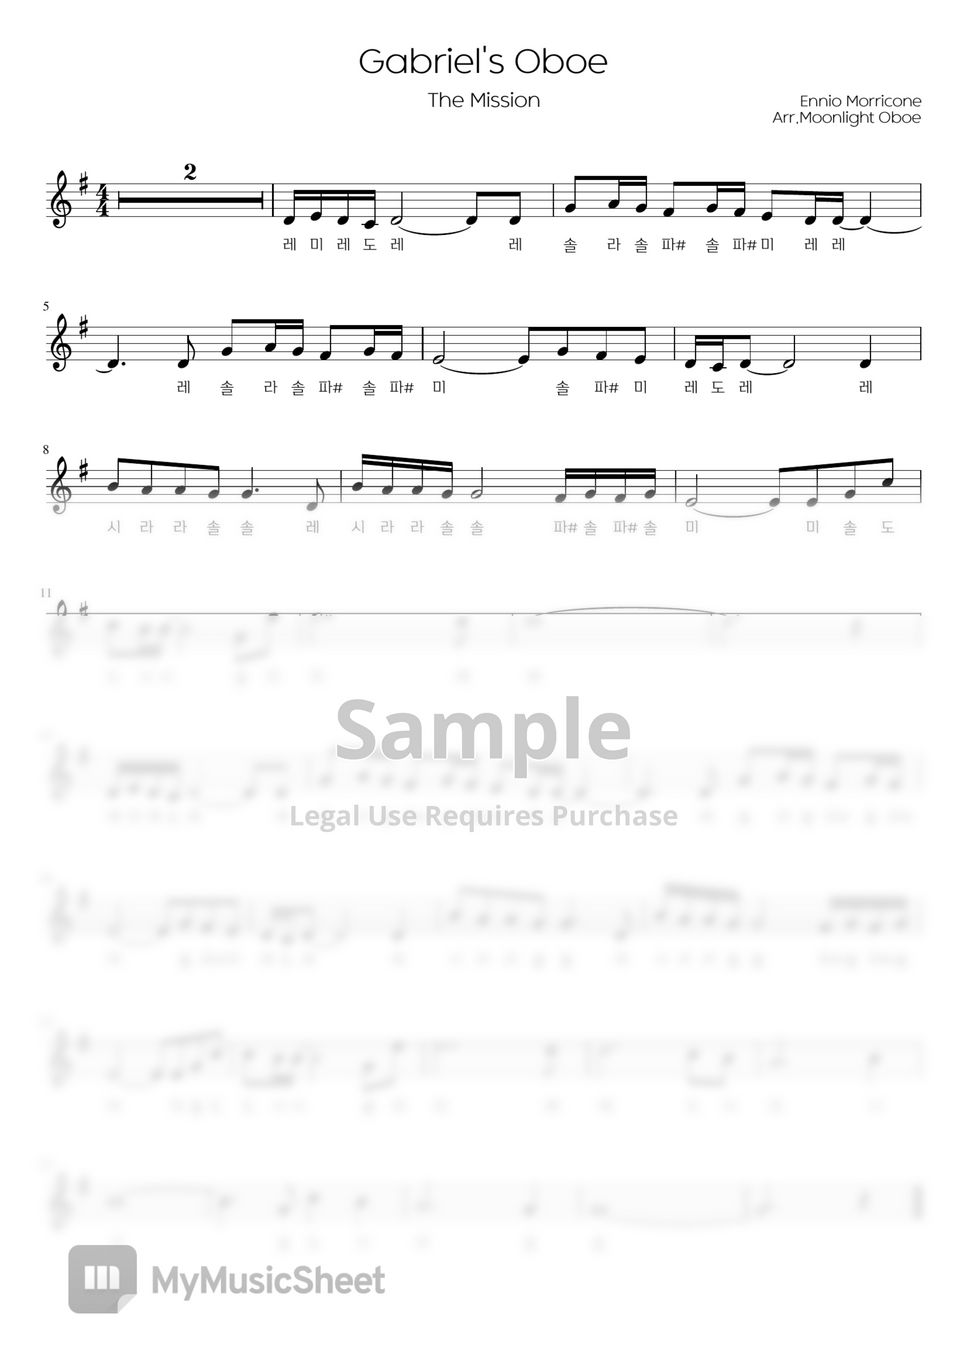 Ennio Morricone - Gabriel's Oboe (낮은 키) (계이름 악보 (G Major)) by Moonlight Oboe